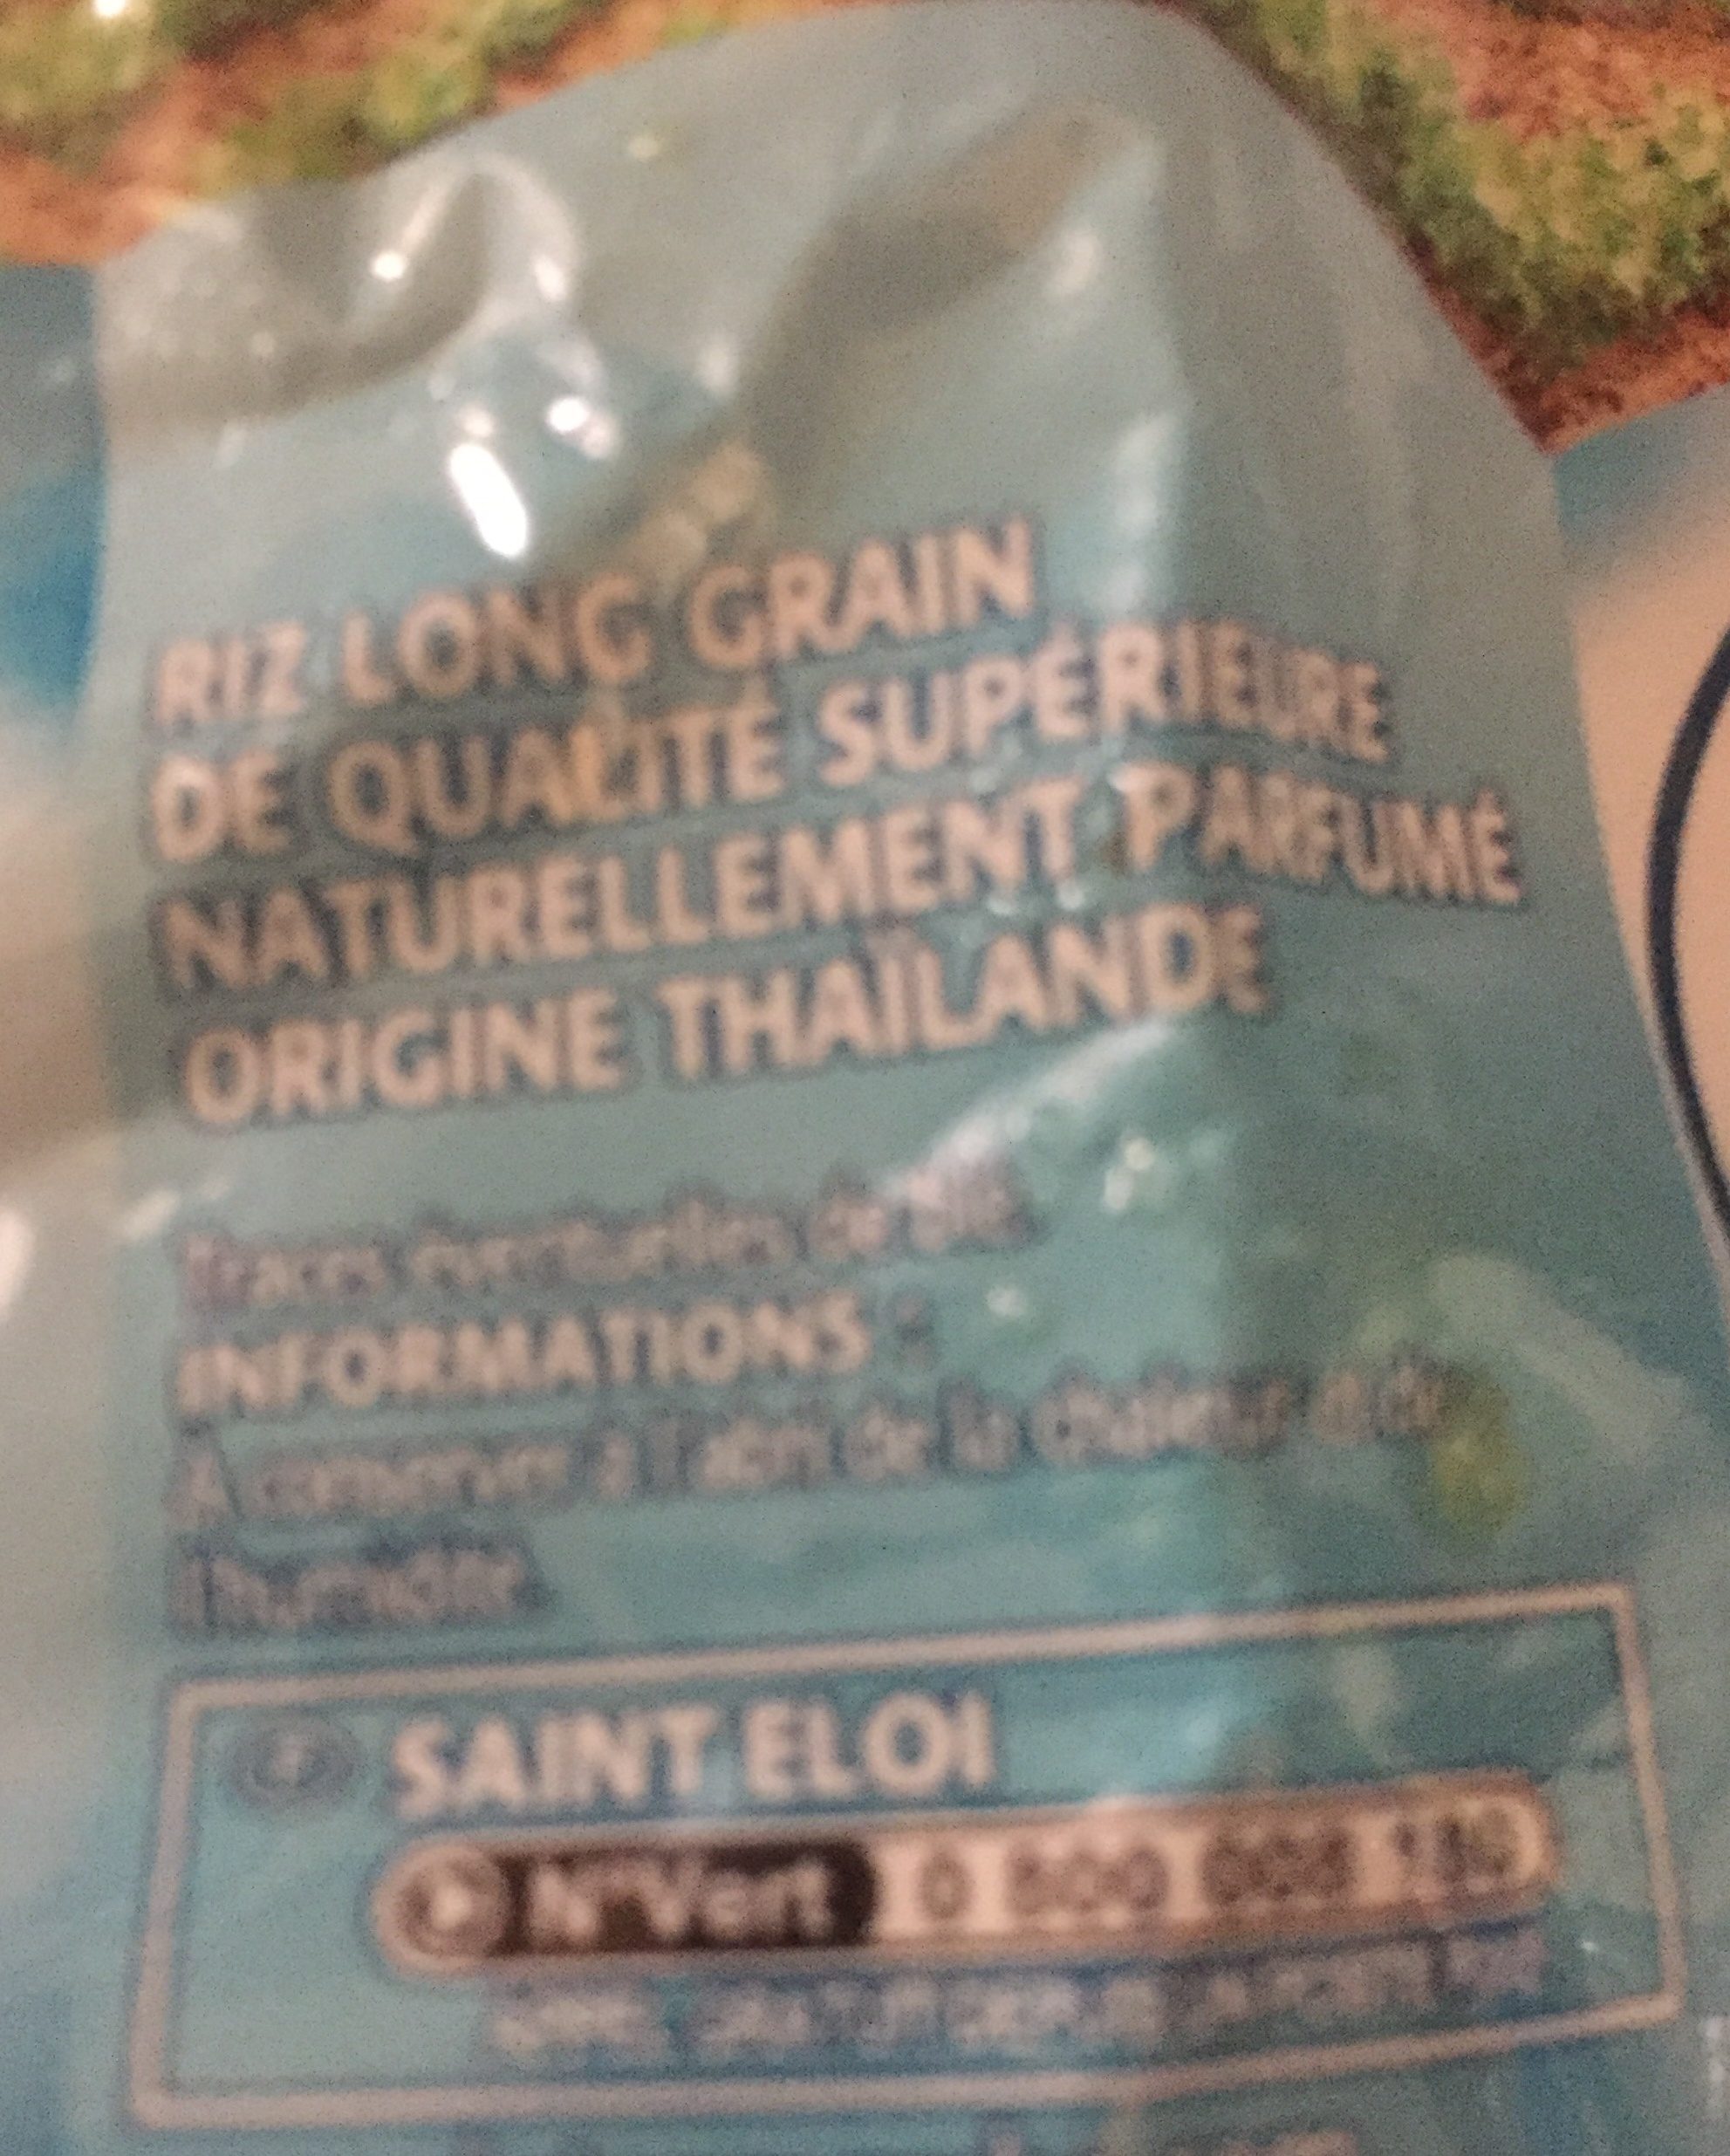 Riz Thaï - Ingredients - fr